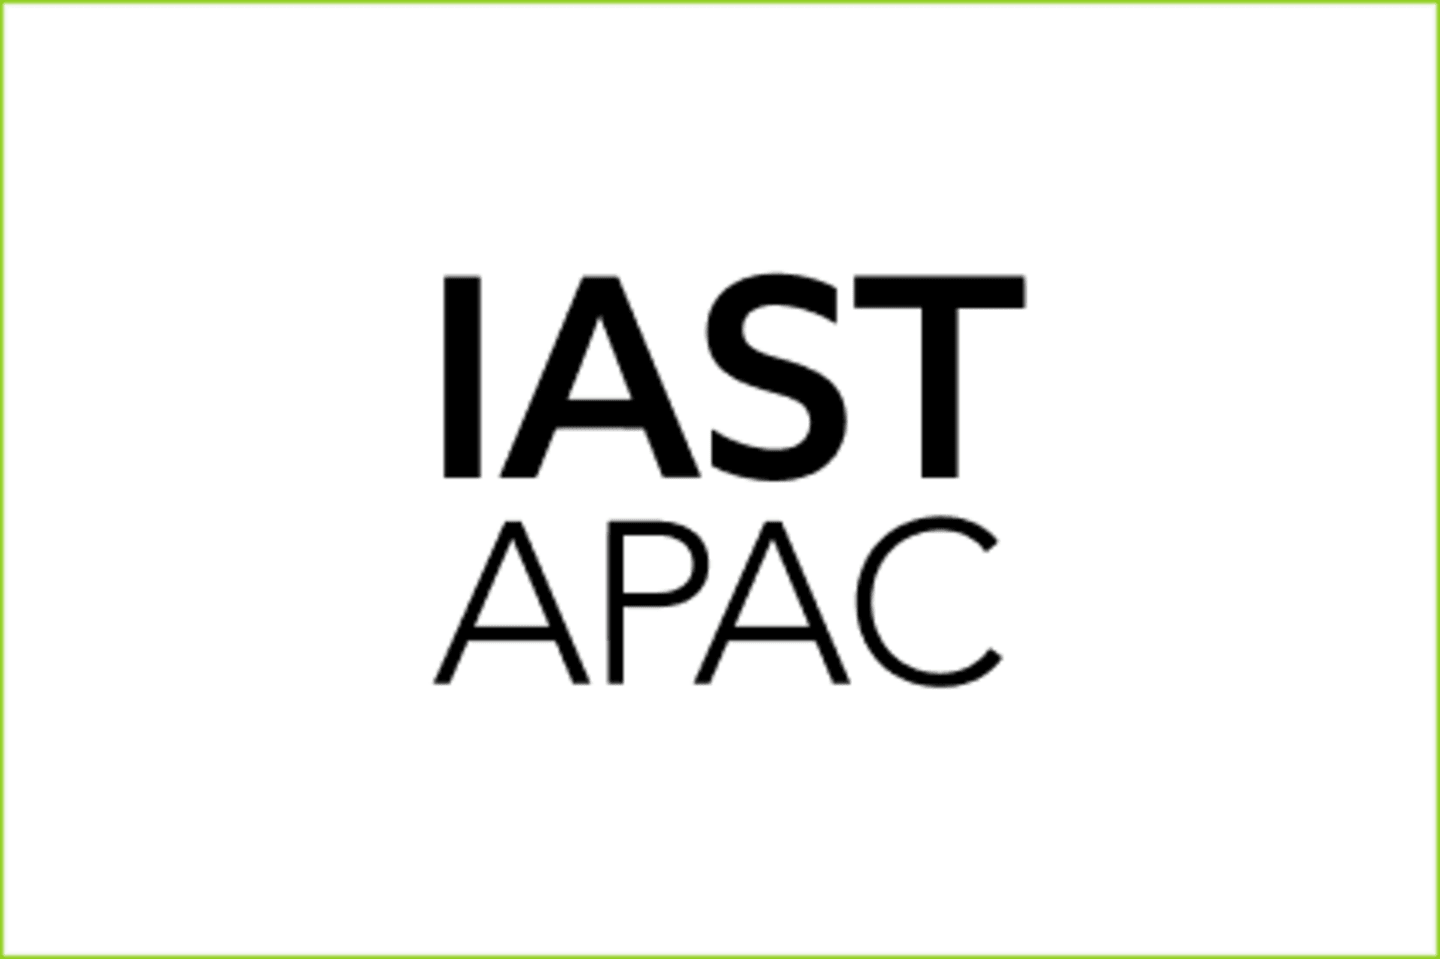 IAST APAC logo.